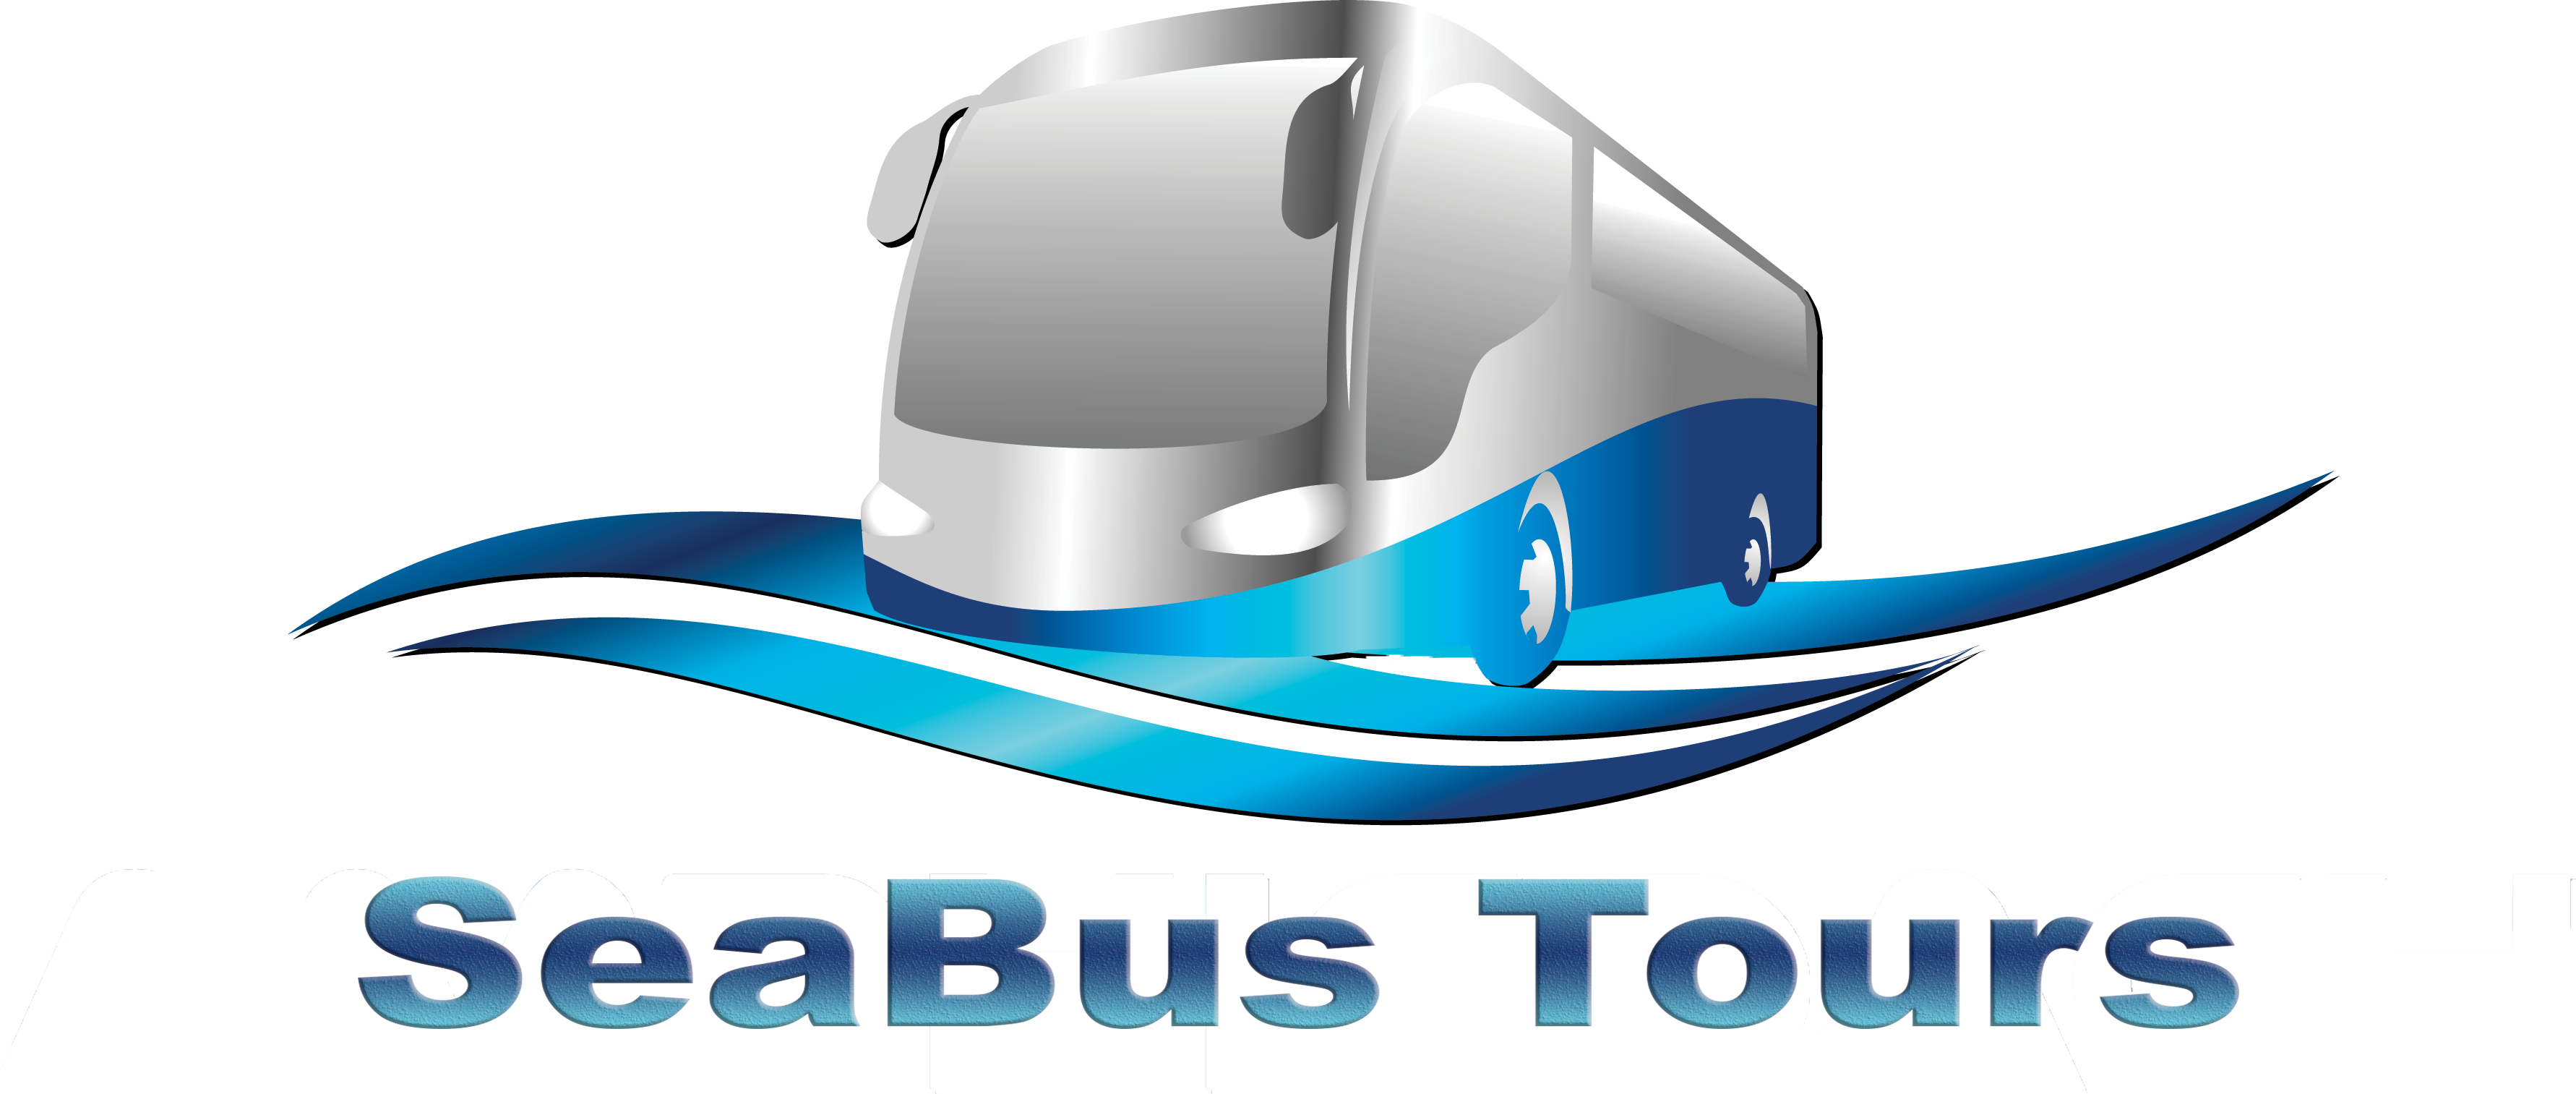 SeaBus Tours